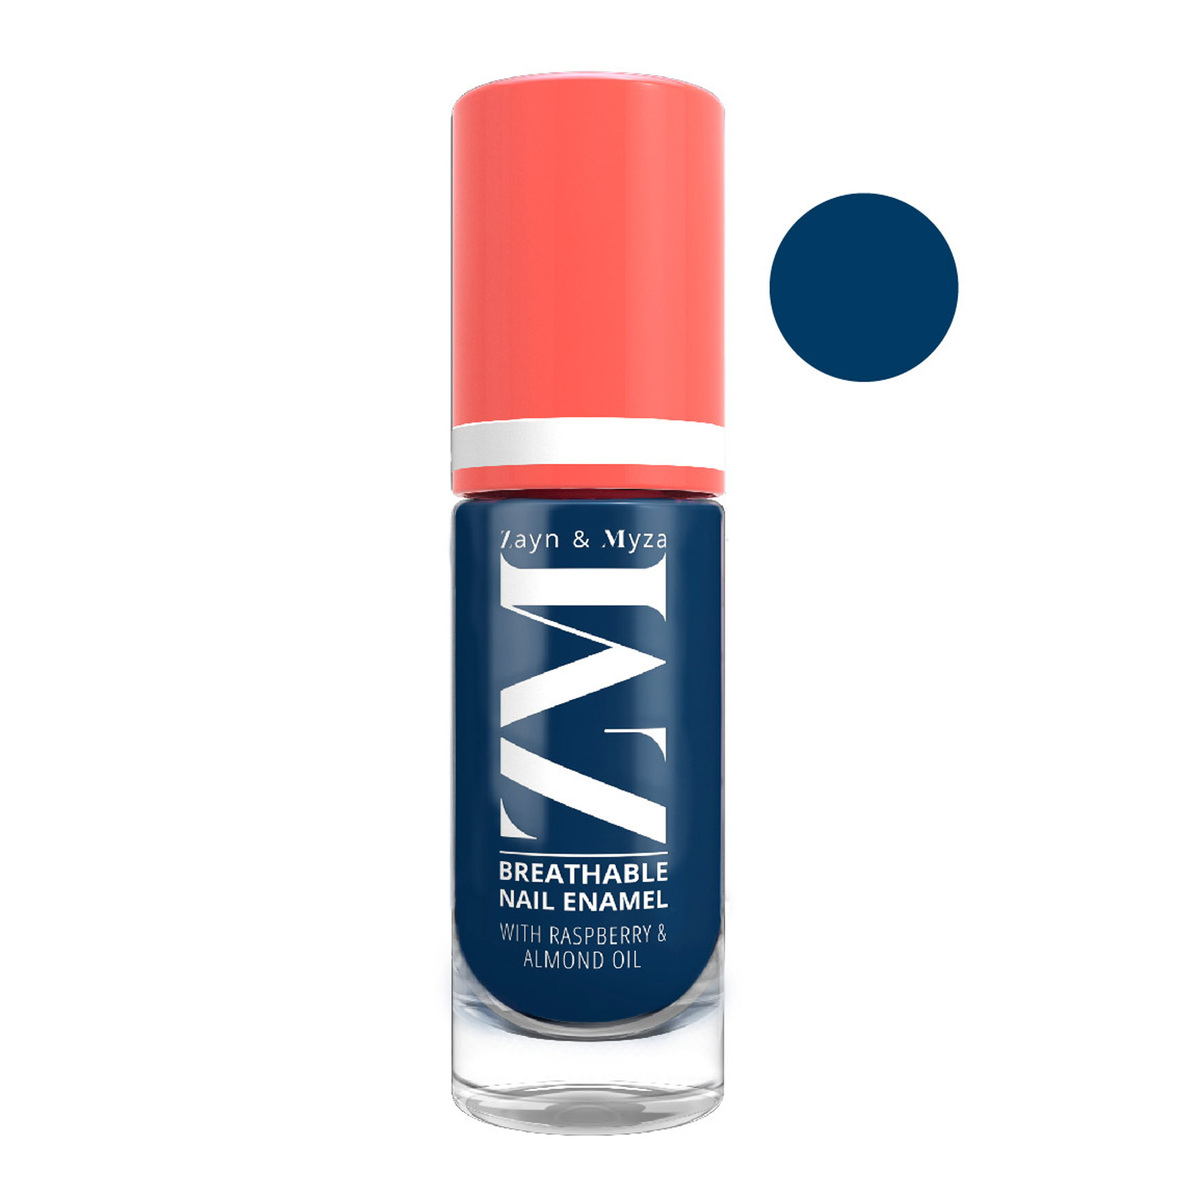 Zayn & Myza Breathable High Gloss Nail Polish, 6 ml, Blueberry Pop